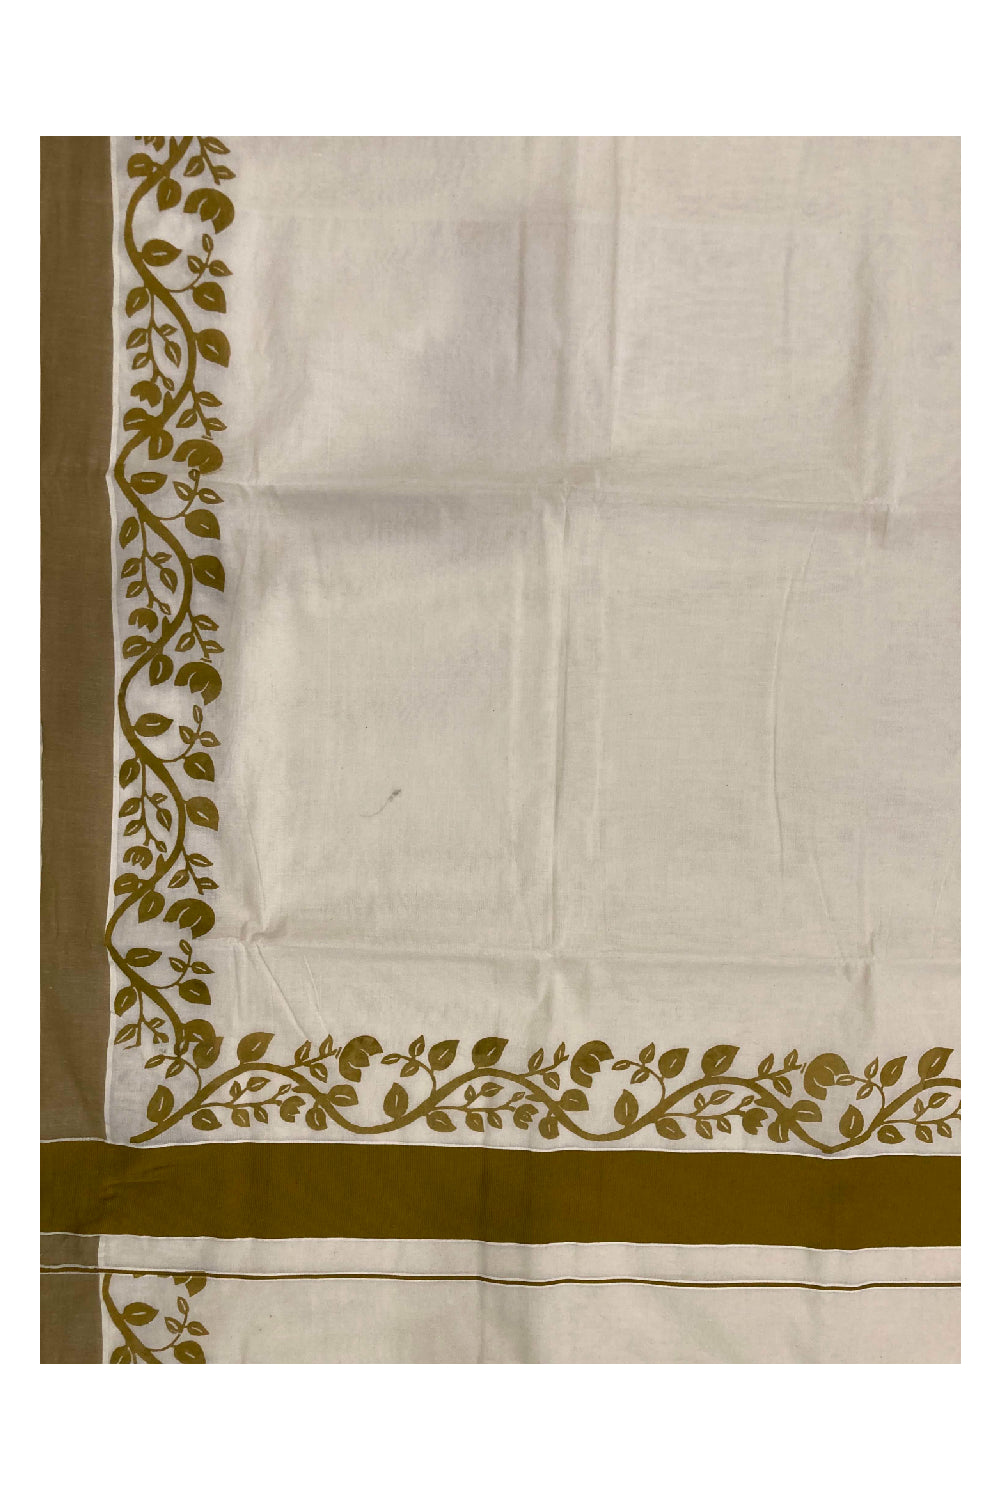 Southloom Original Design Kerala Saree with Khaki Colour Floral Vines Block Print